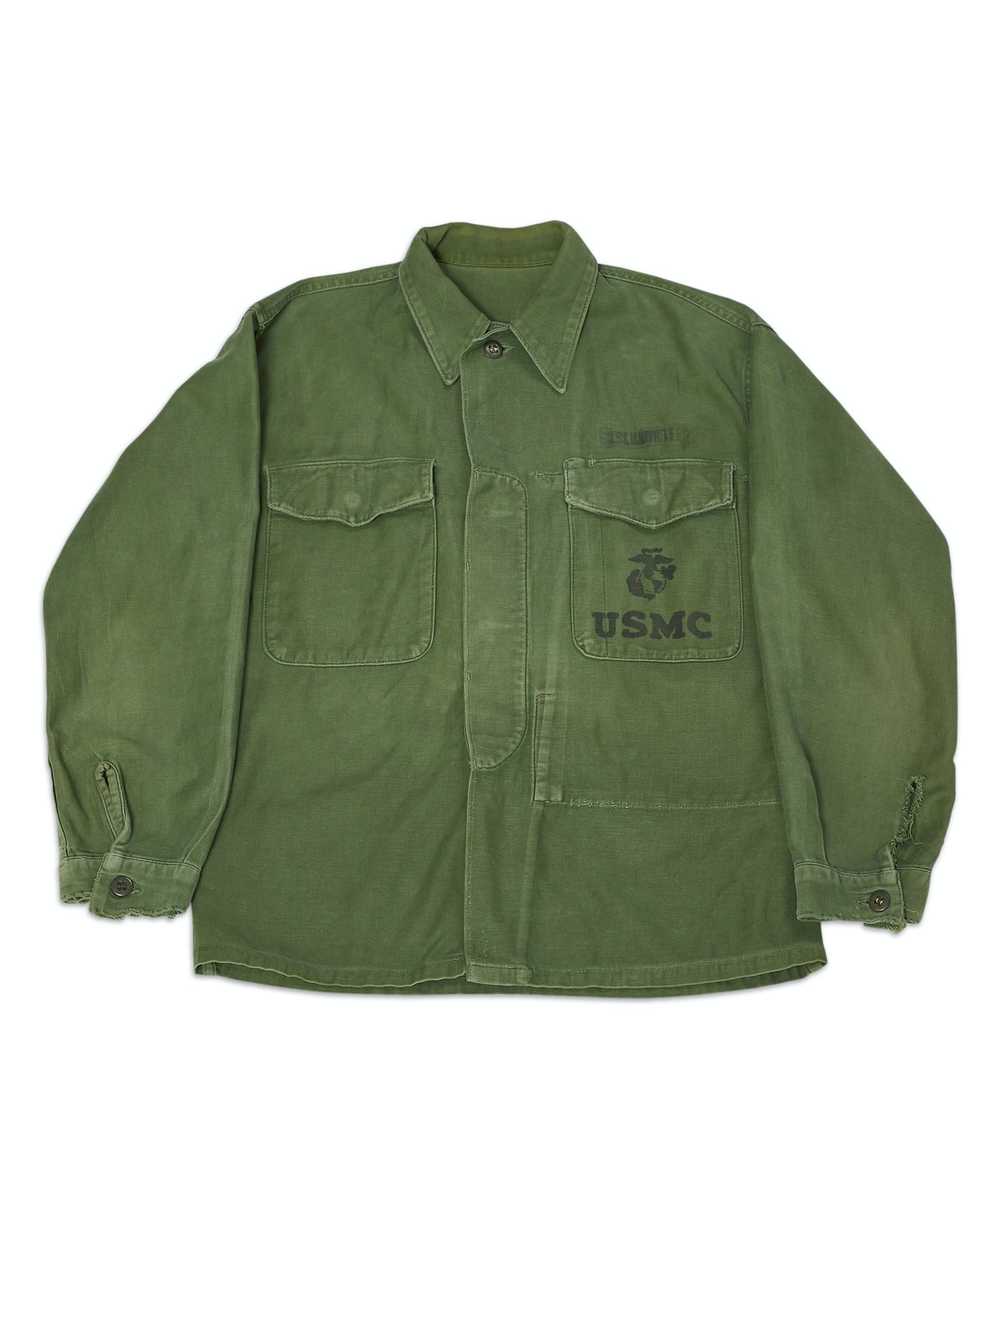 Vintage USMC Field Shirt - image 1